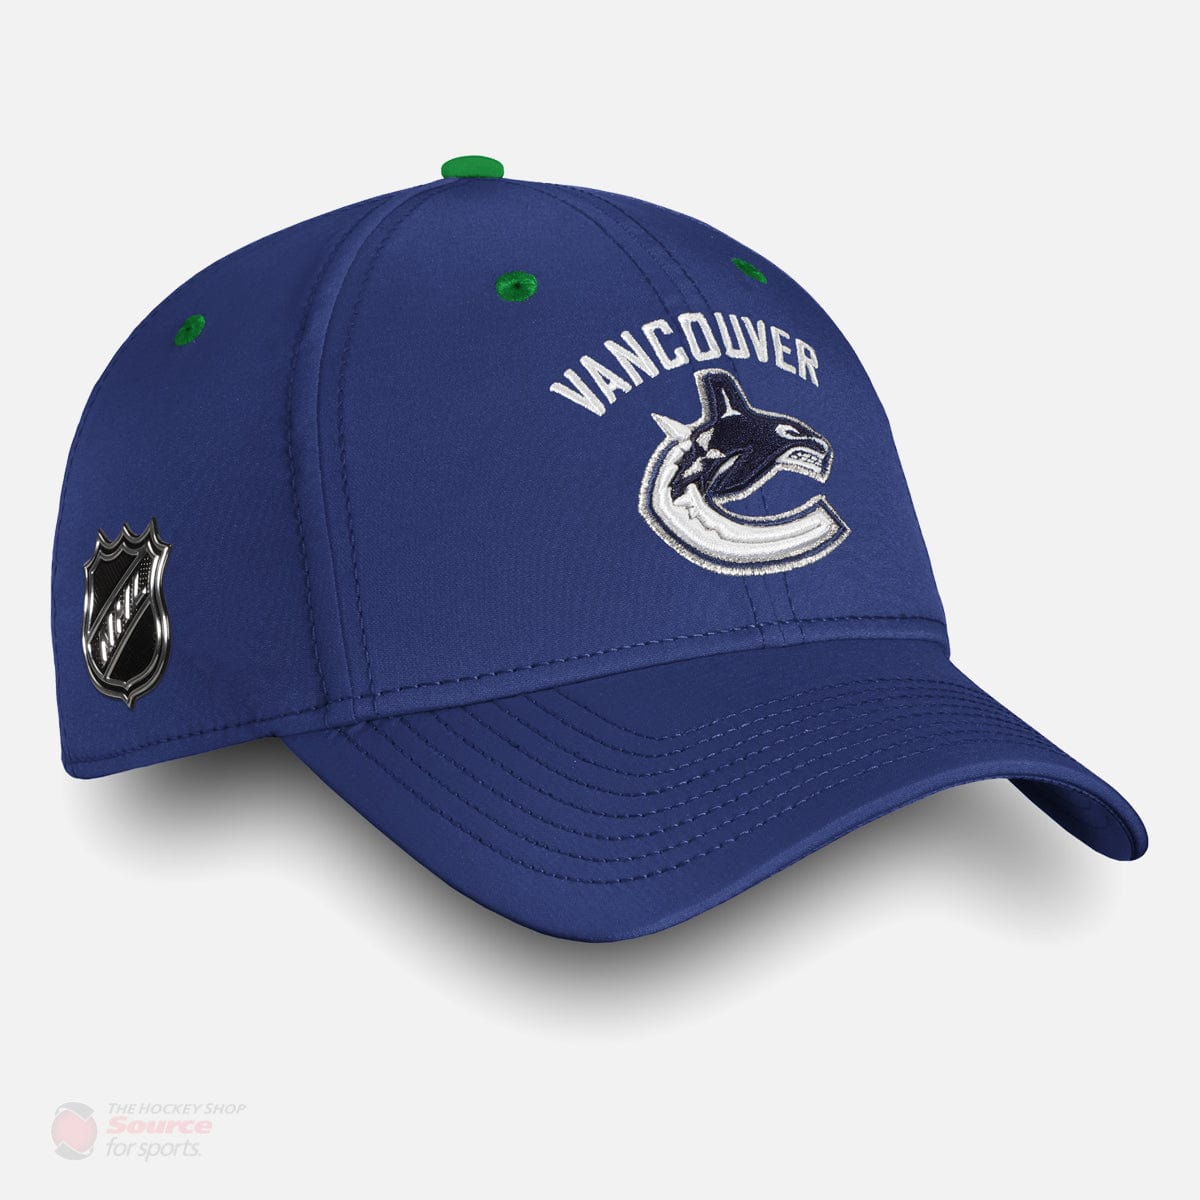 Fanatics NHL Authentic Pro Rinkside Speed Flex Hat (2018)